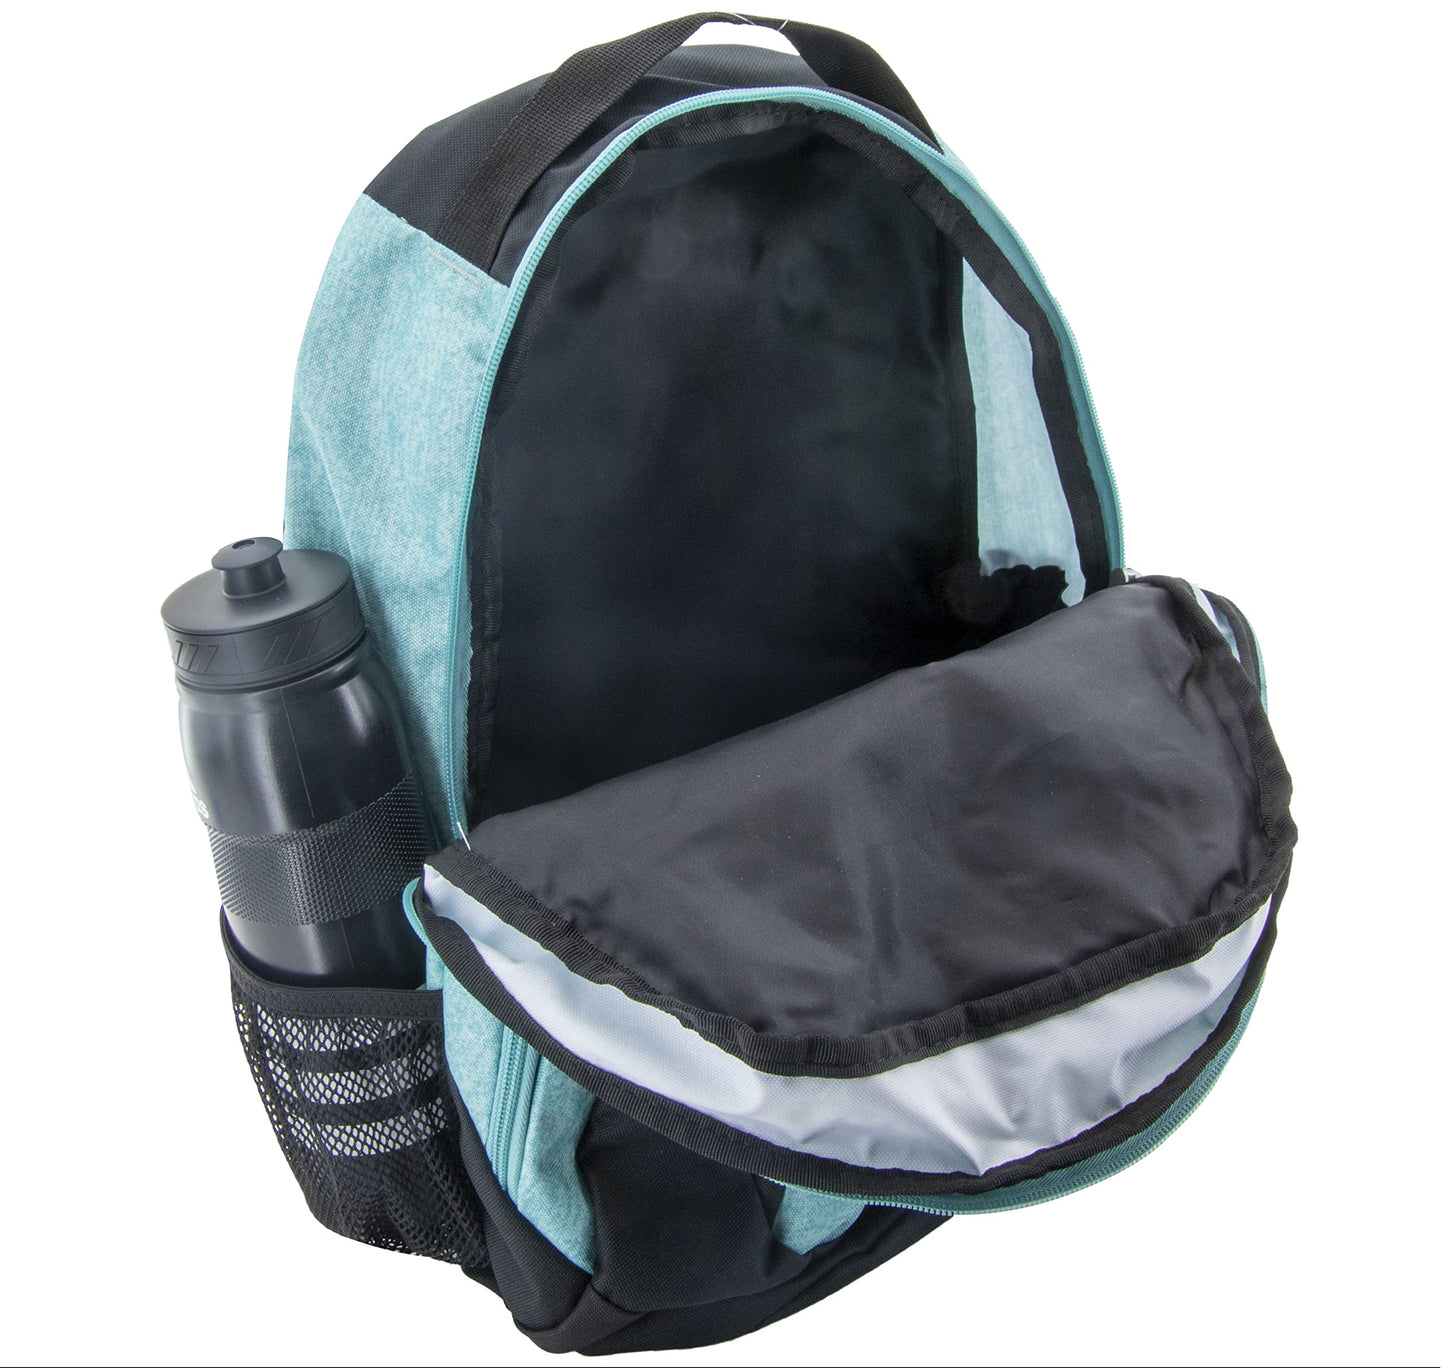 Adidas Unisex Journal Backpack